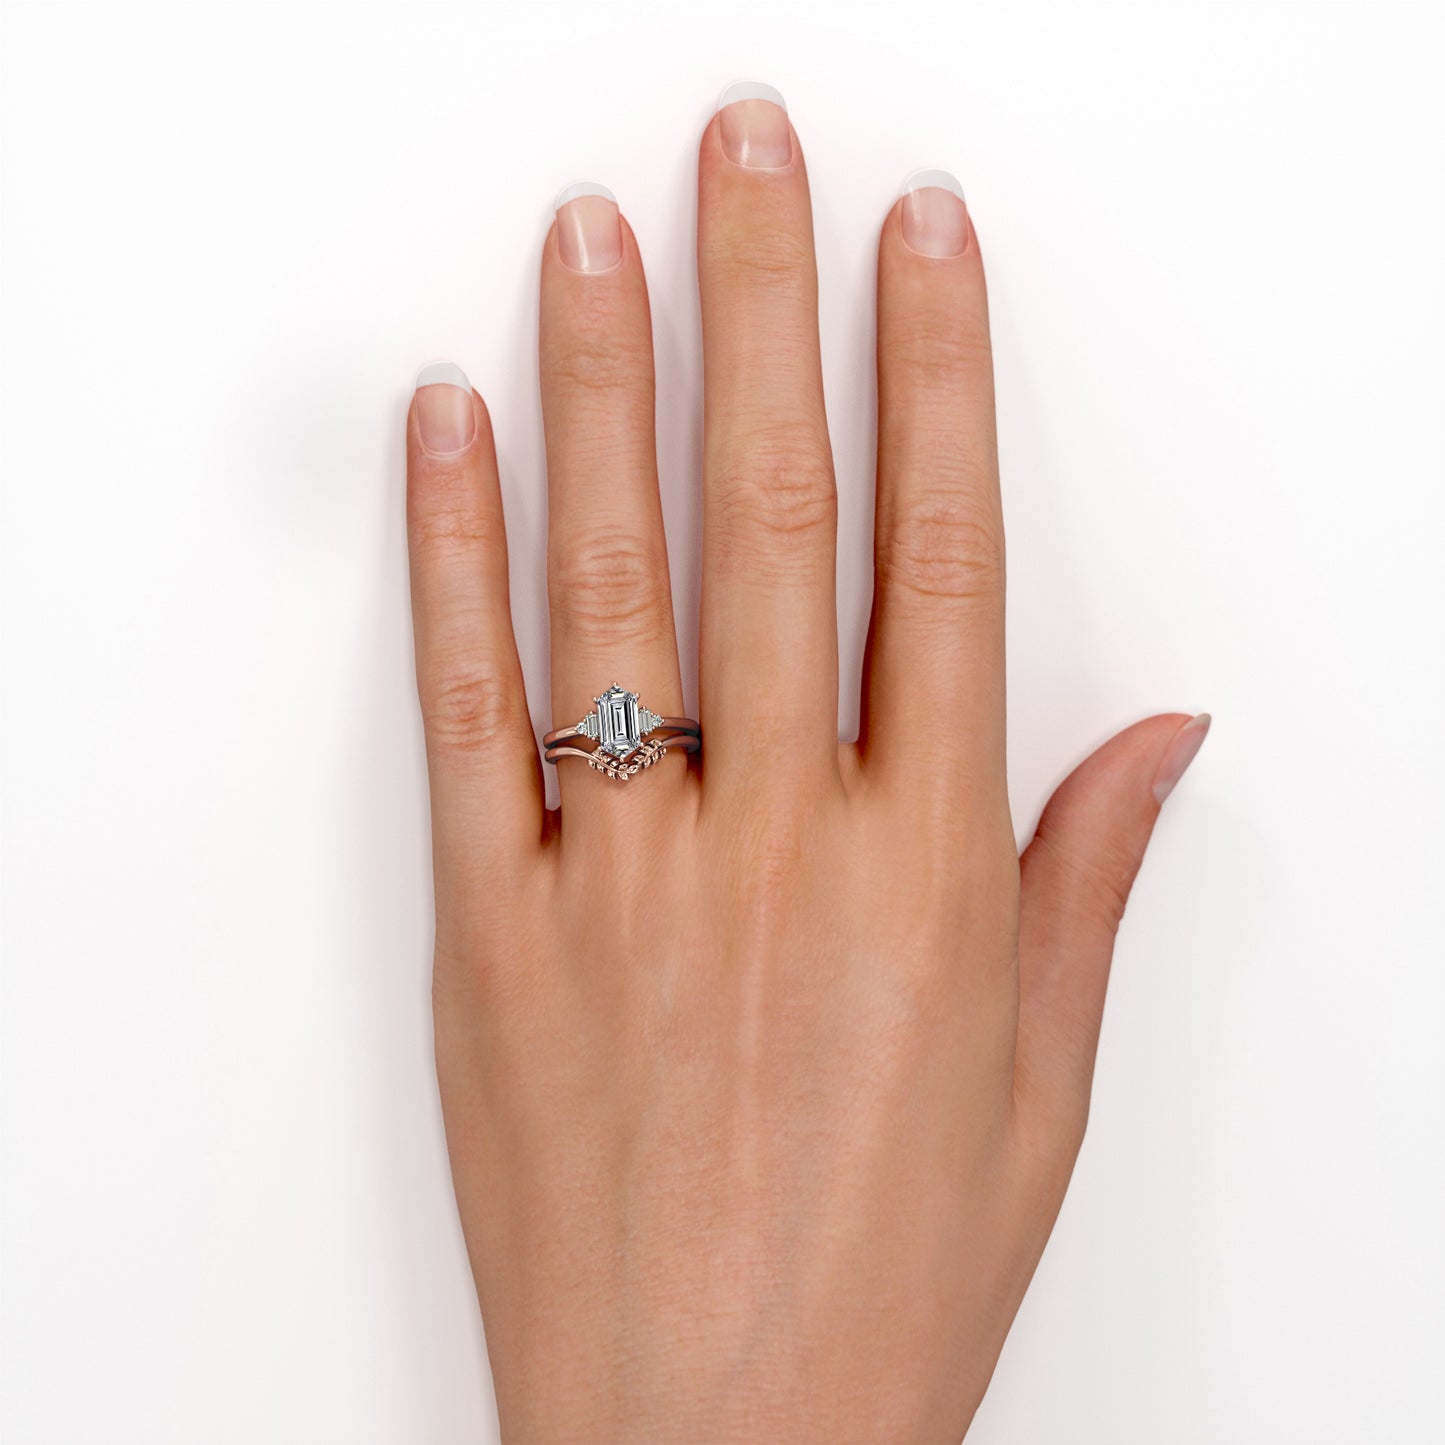 Vintage leaf design 1.1 carat Hexagon shaped Moissanite and diamond wedding ring set for women in Black gold